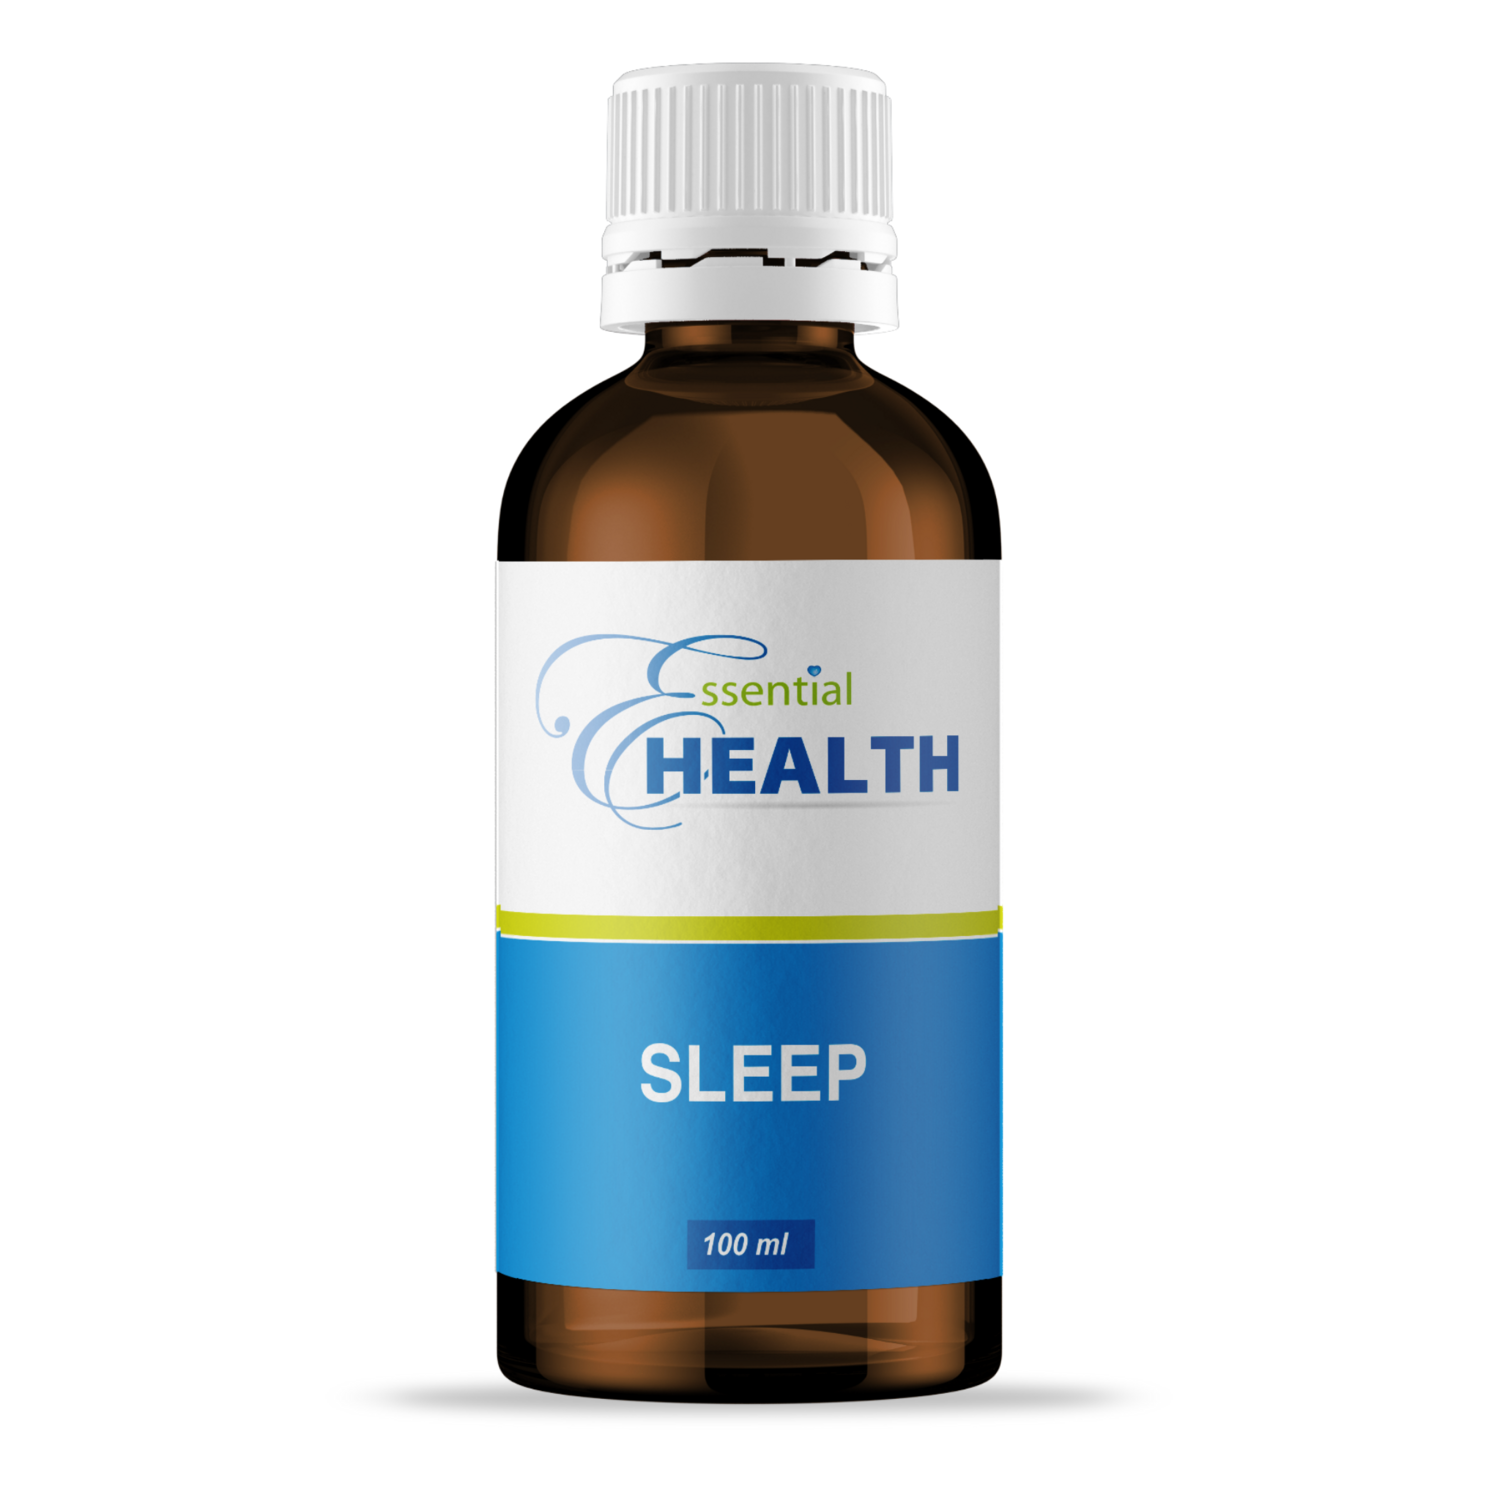 Essential Health Sleep 100ml